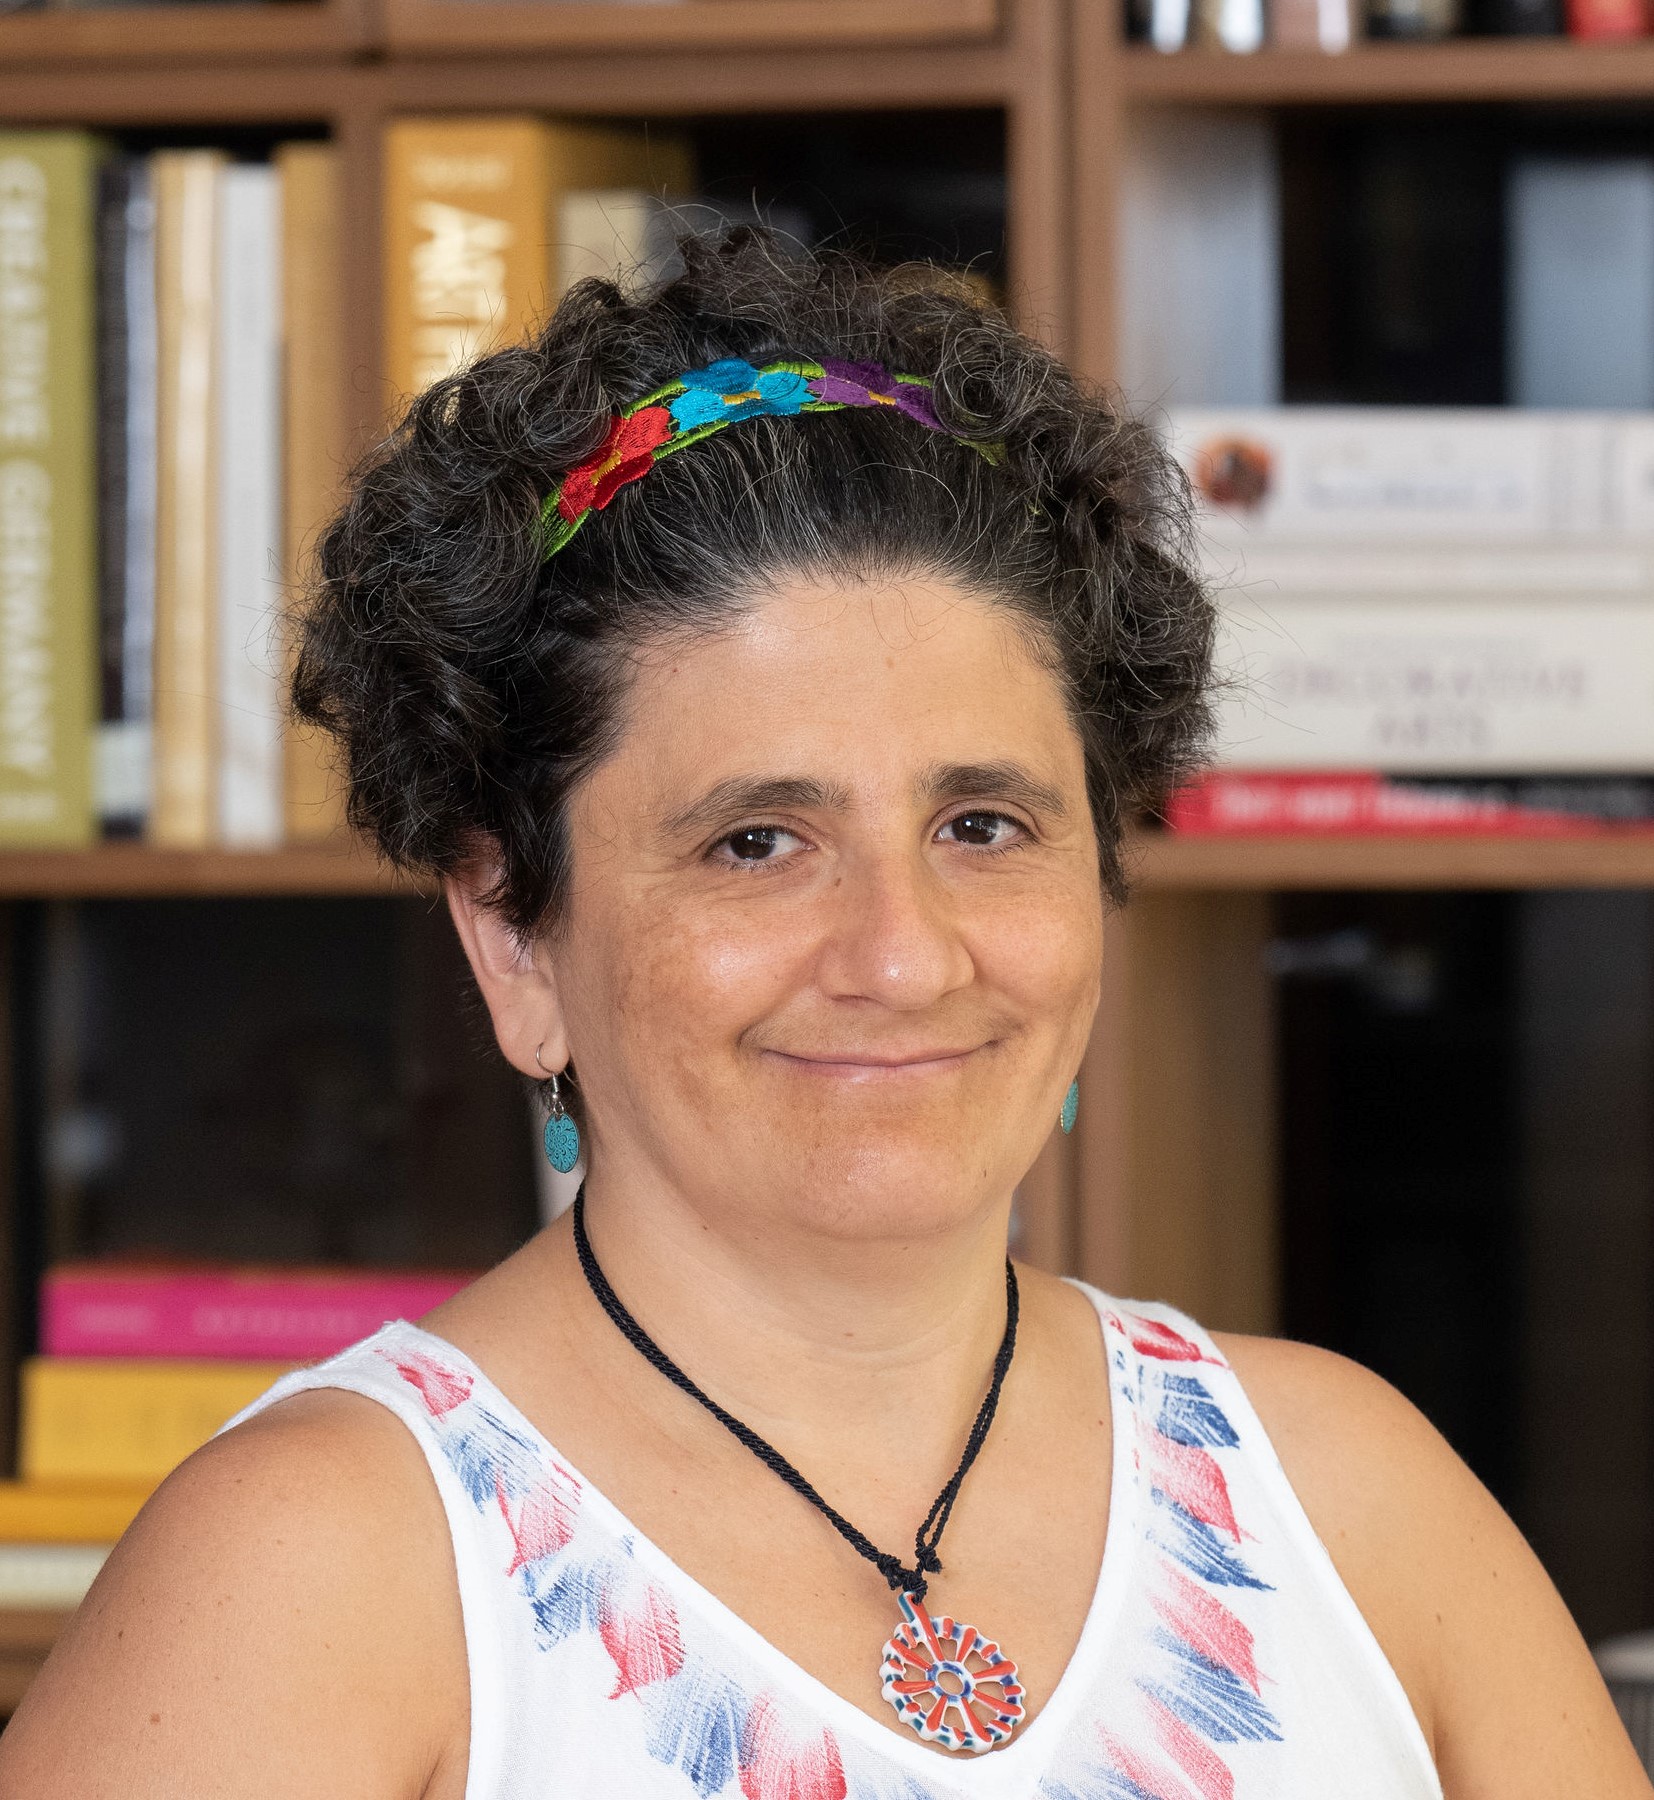 Associate Professor Ana María del Río-González